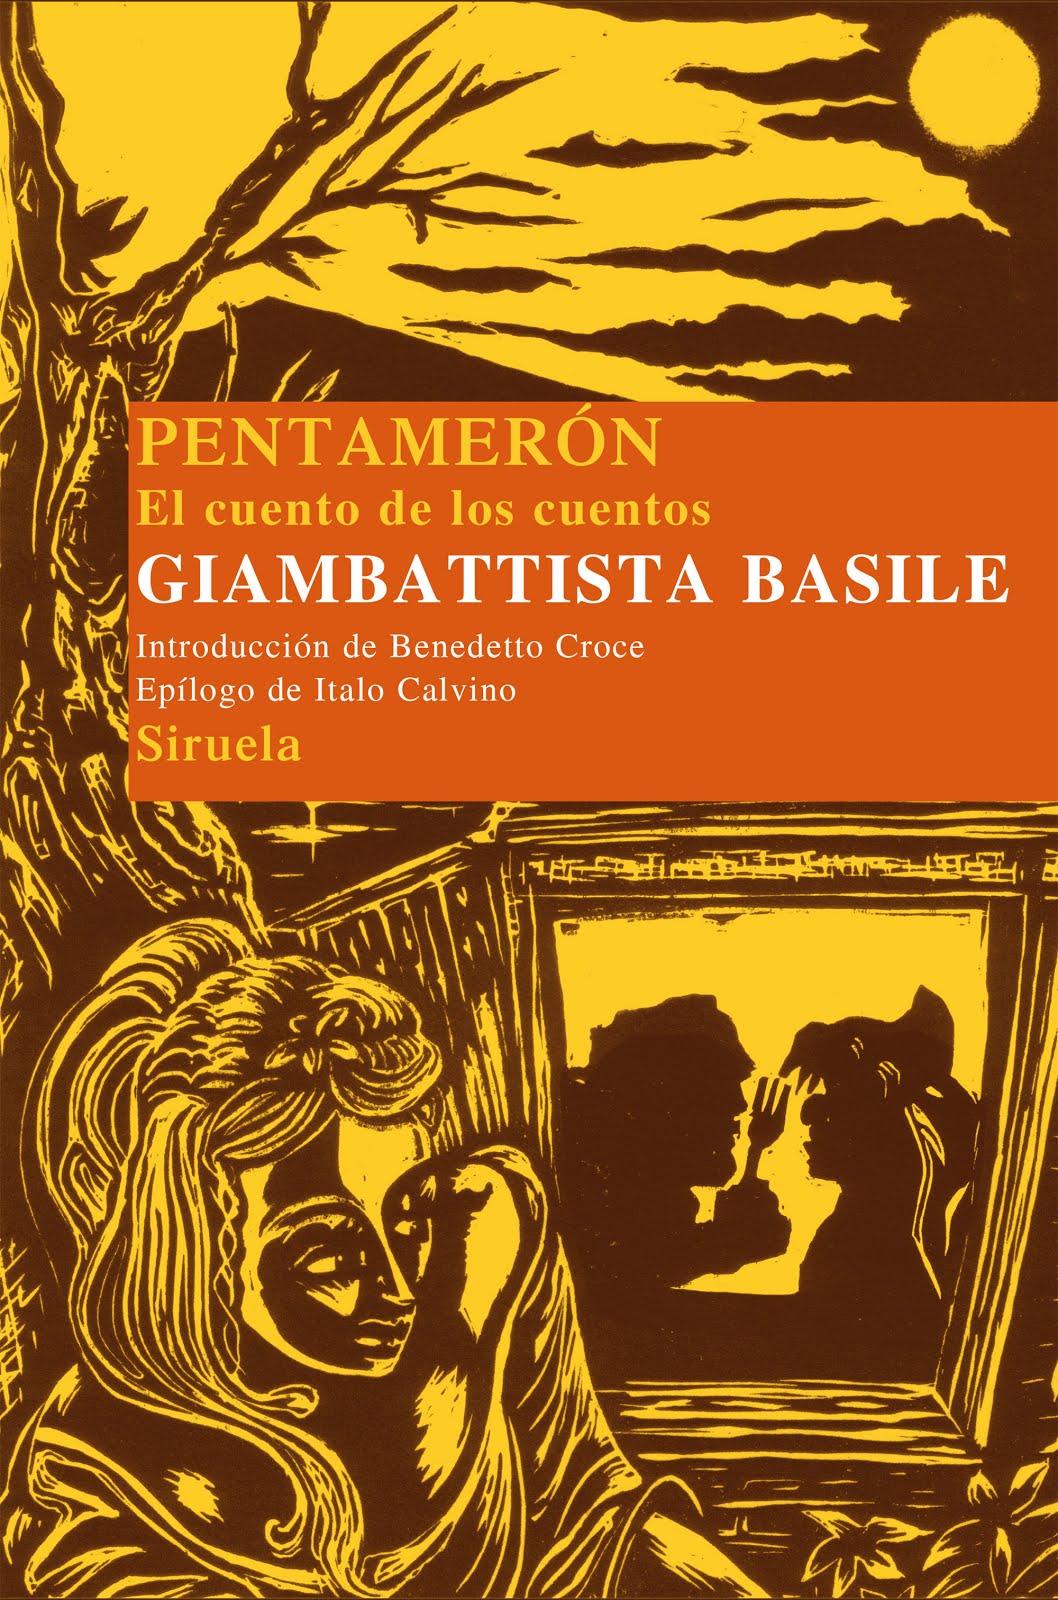 PENTAMERÓN-Giambattista Basile-Editorial Siruela